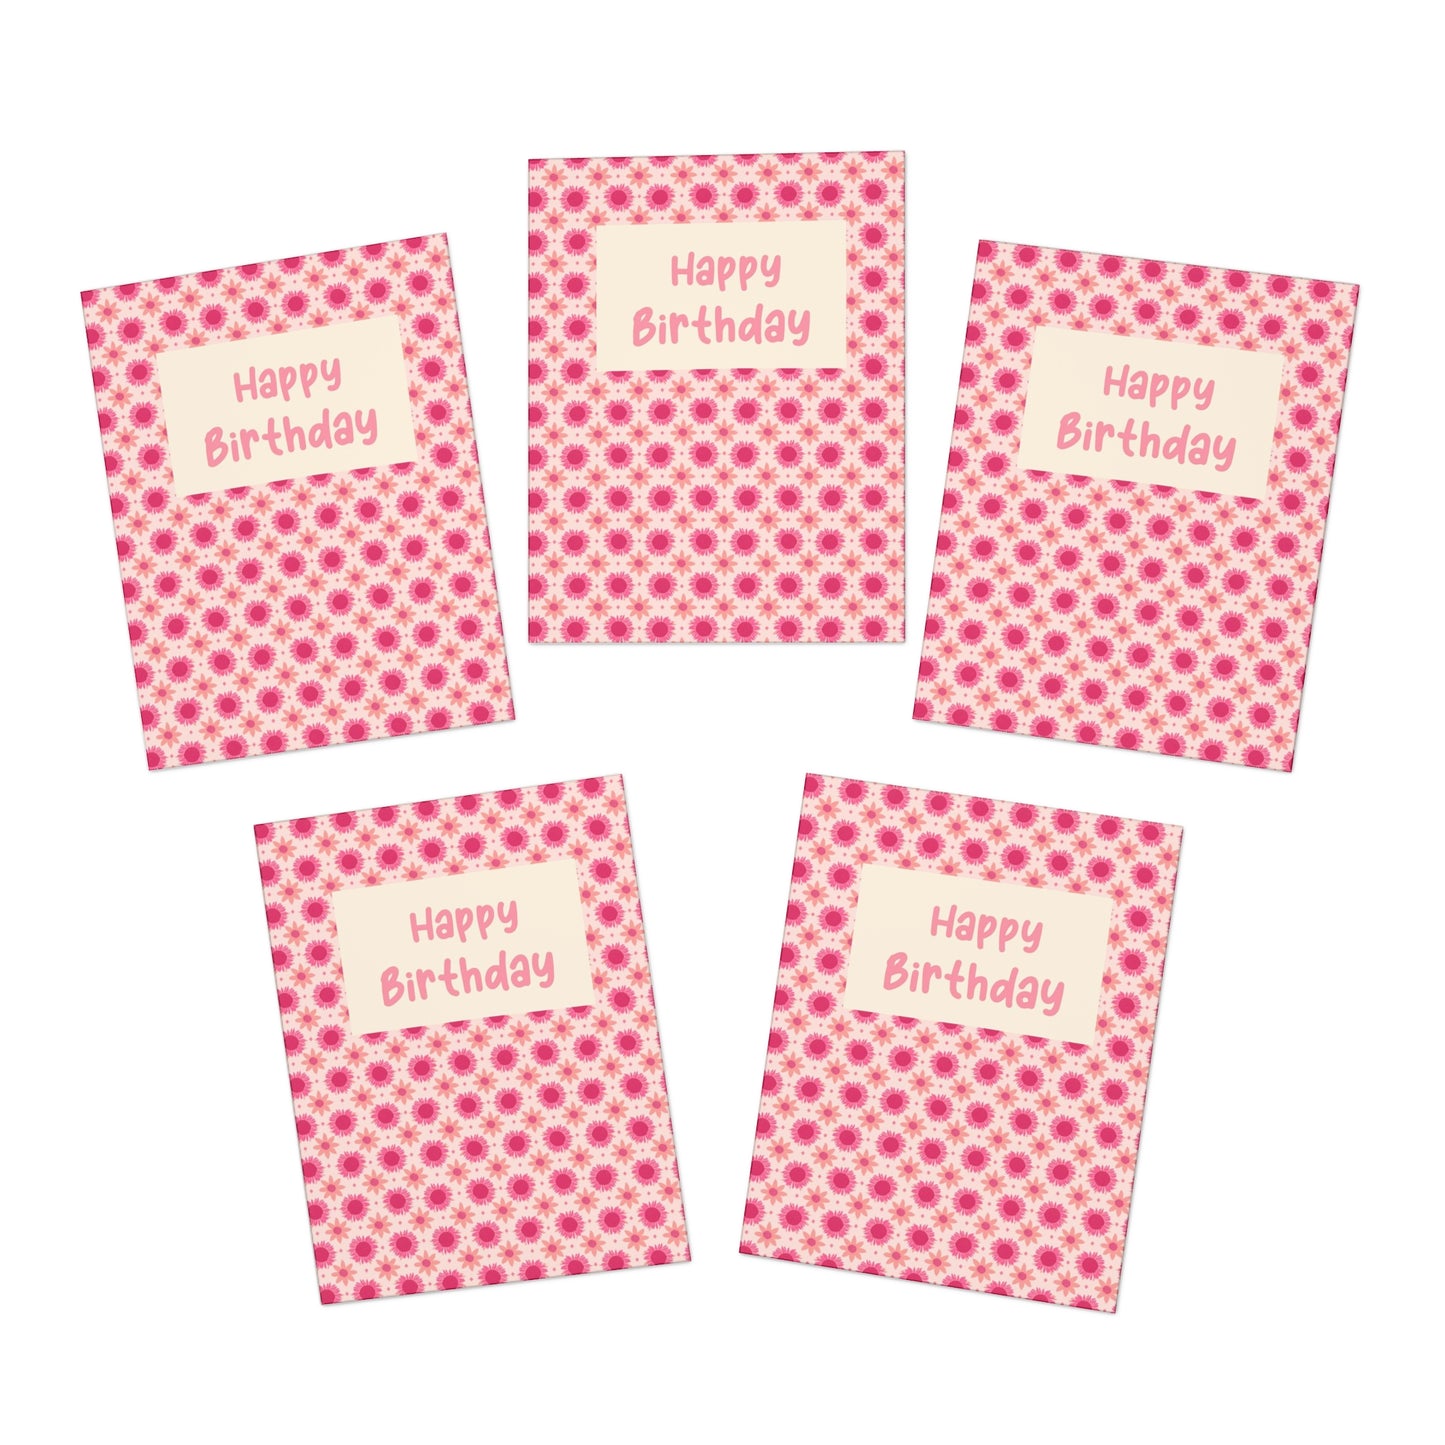 Retro Pink Sunflowers Birthday Greeting Cards (5-Pack)